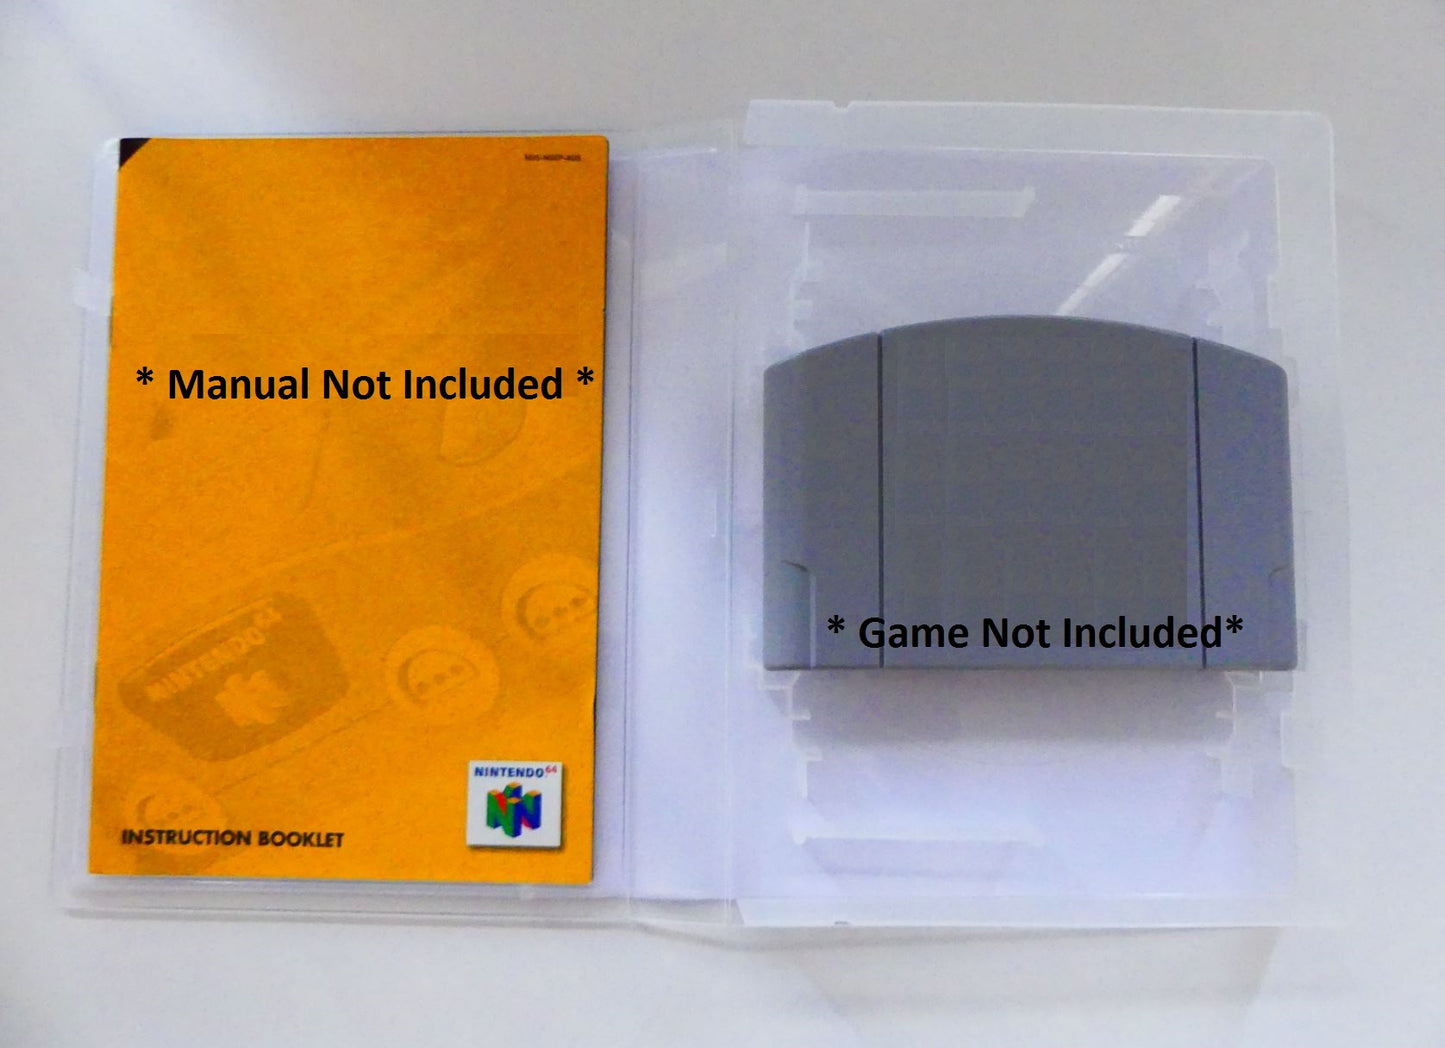 Pokemon Stadium - N64 Replacement Case